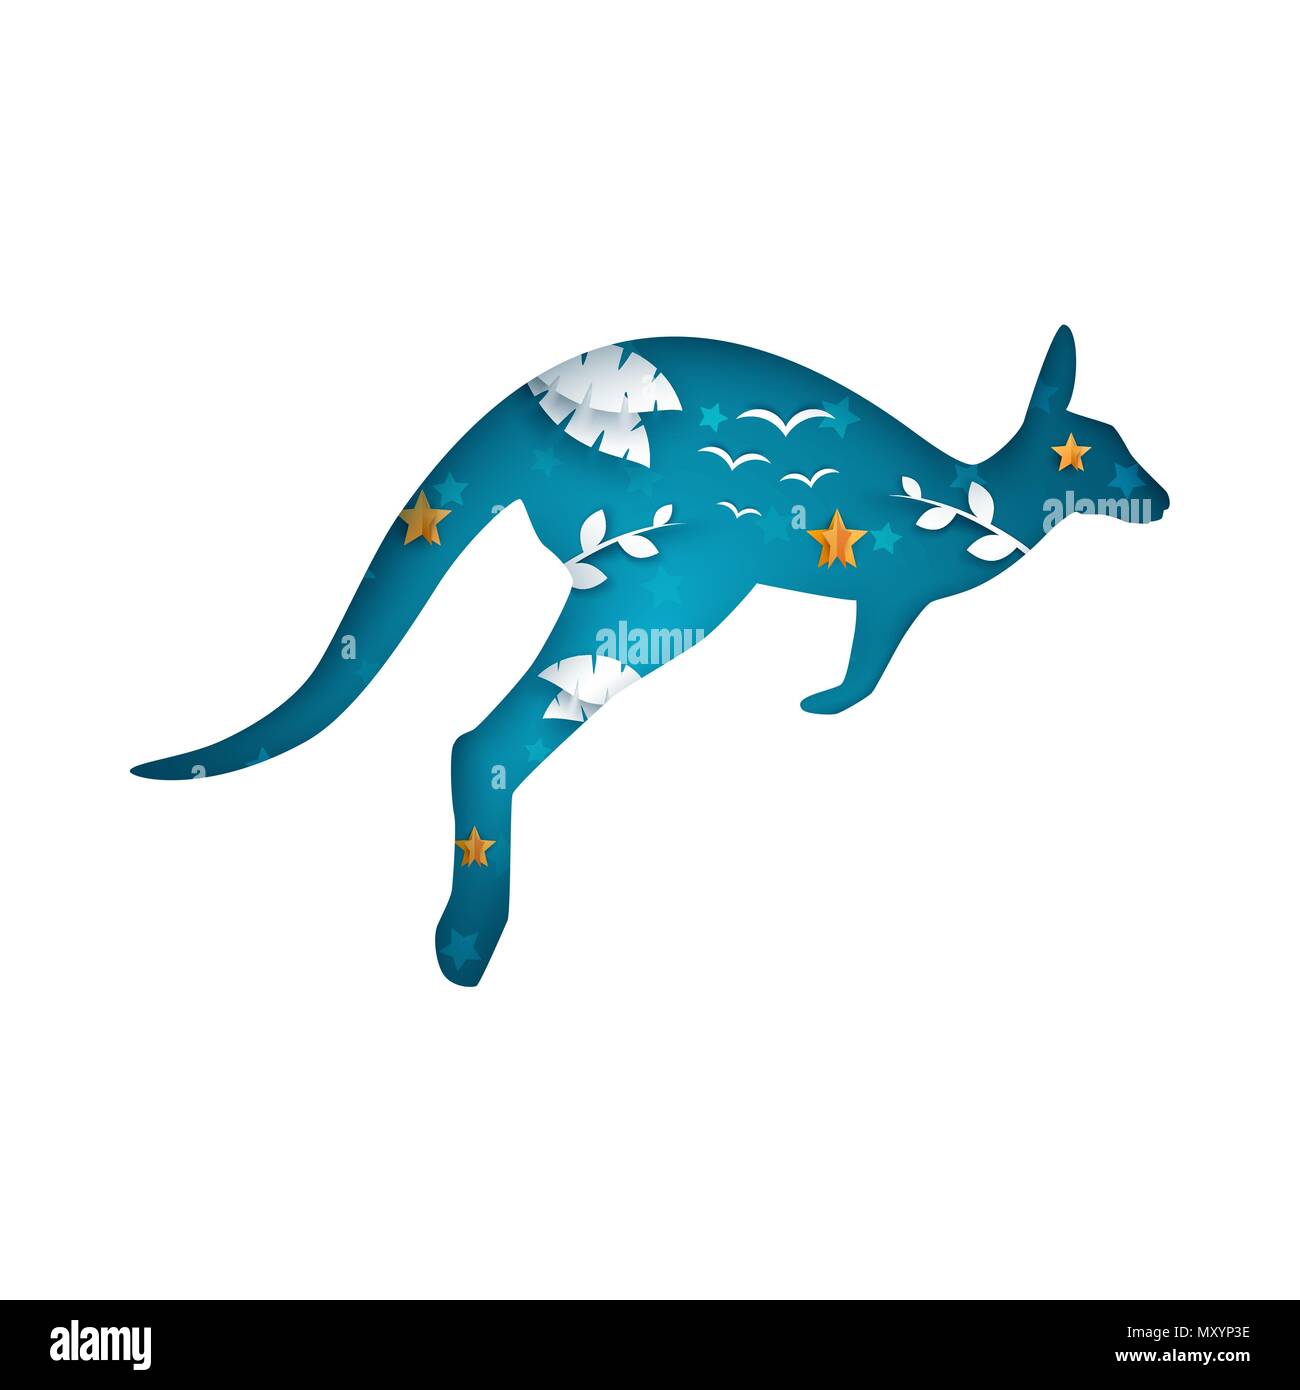 Kangaroo cartoon Cut Out Stock Images & Pictures - Alamy